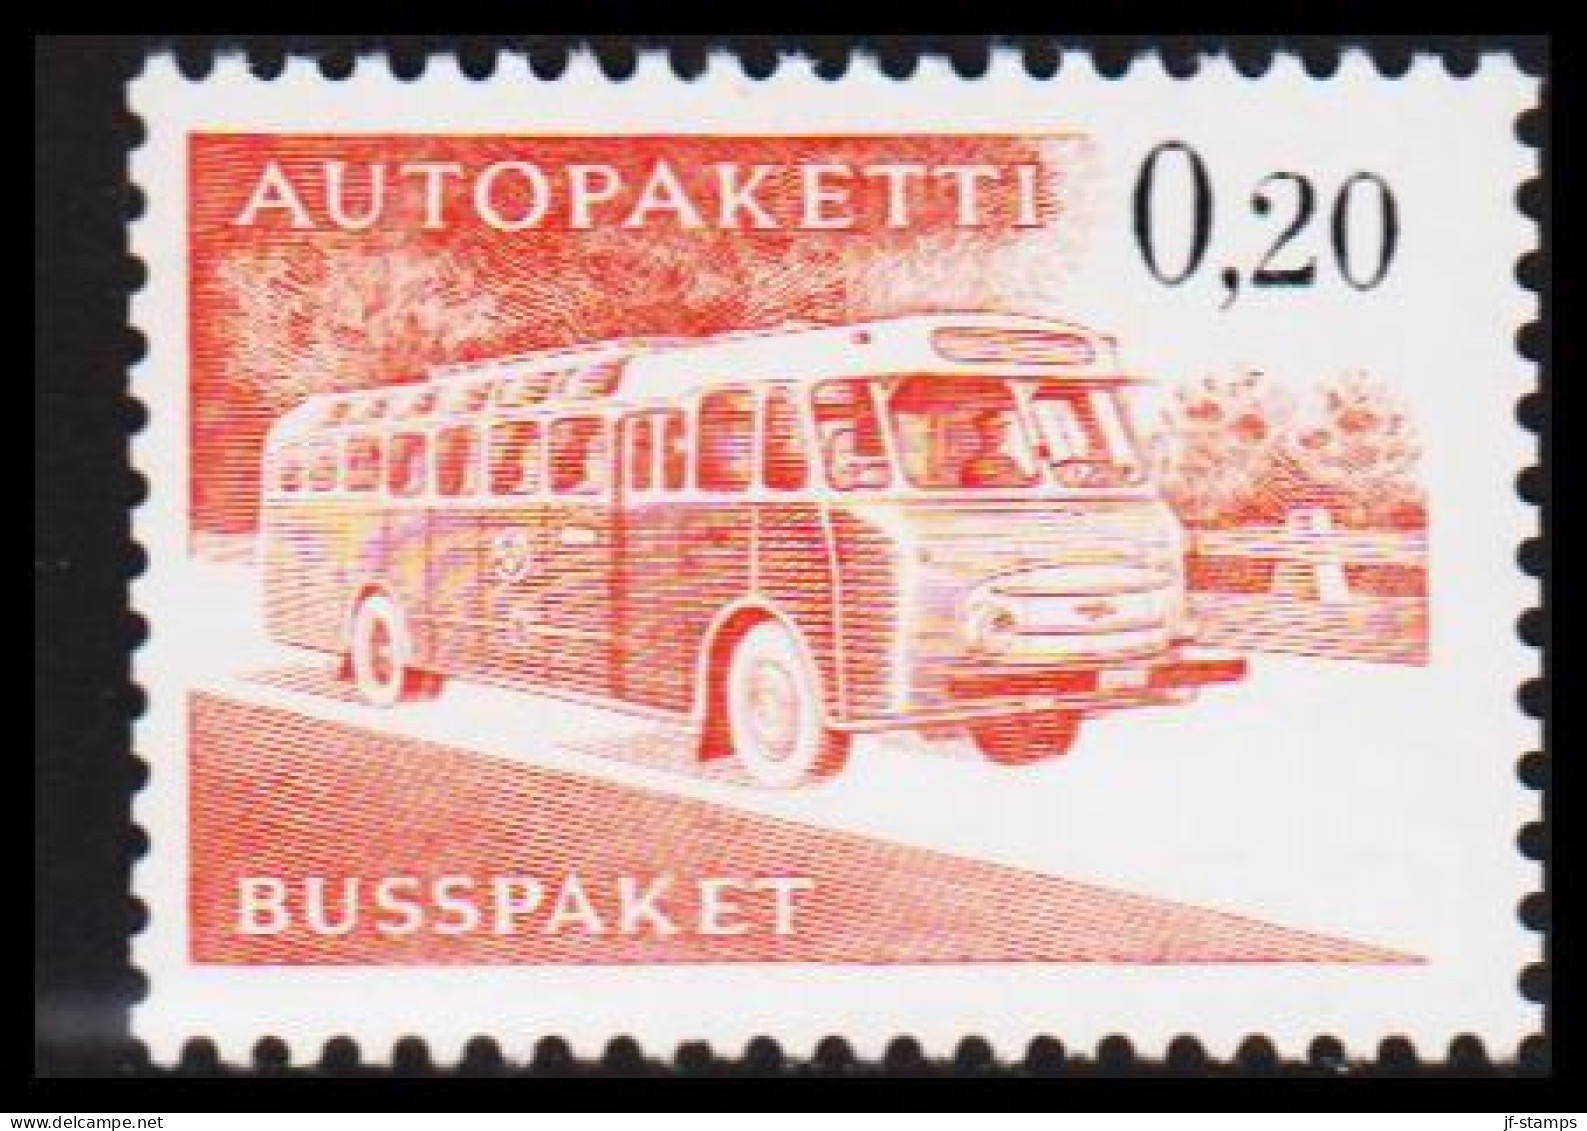 1963-1980. FINLAND. Mail Bus. 0,20 Mk. AUTOPAKETTI - BUSSPAKET Never Hinged. Lumogen. Yell... (Michel AP 11y) - JF535628 - Pakjes Per Postbus